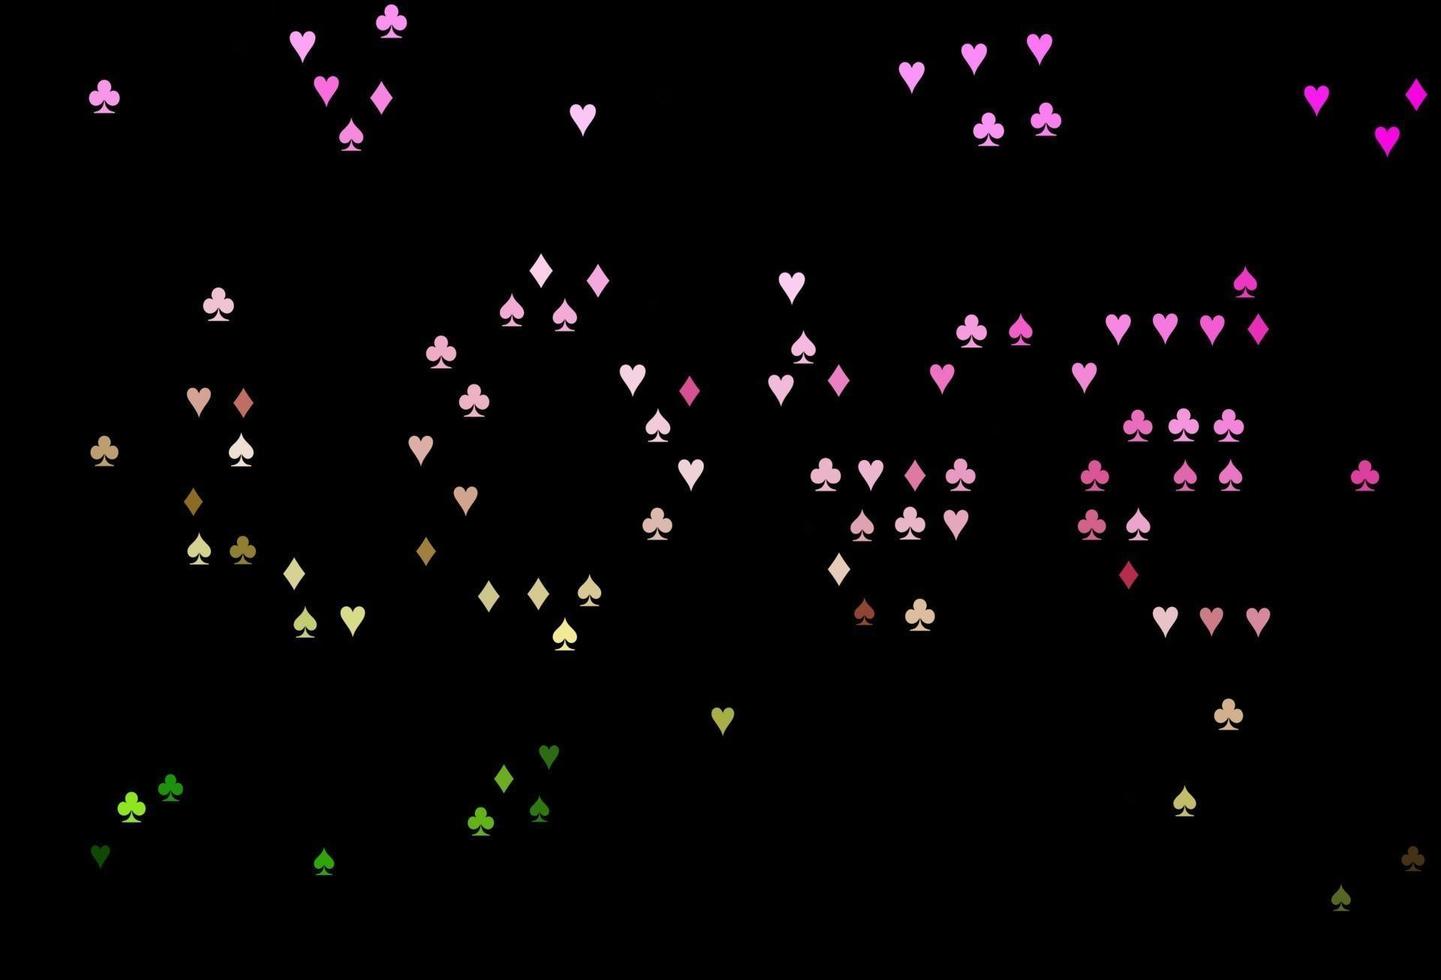 layout de vetor rosa e verde escuro com elementos de cartas.